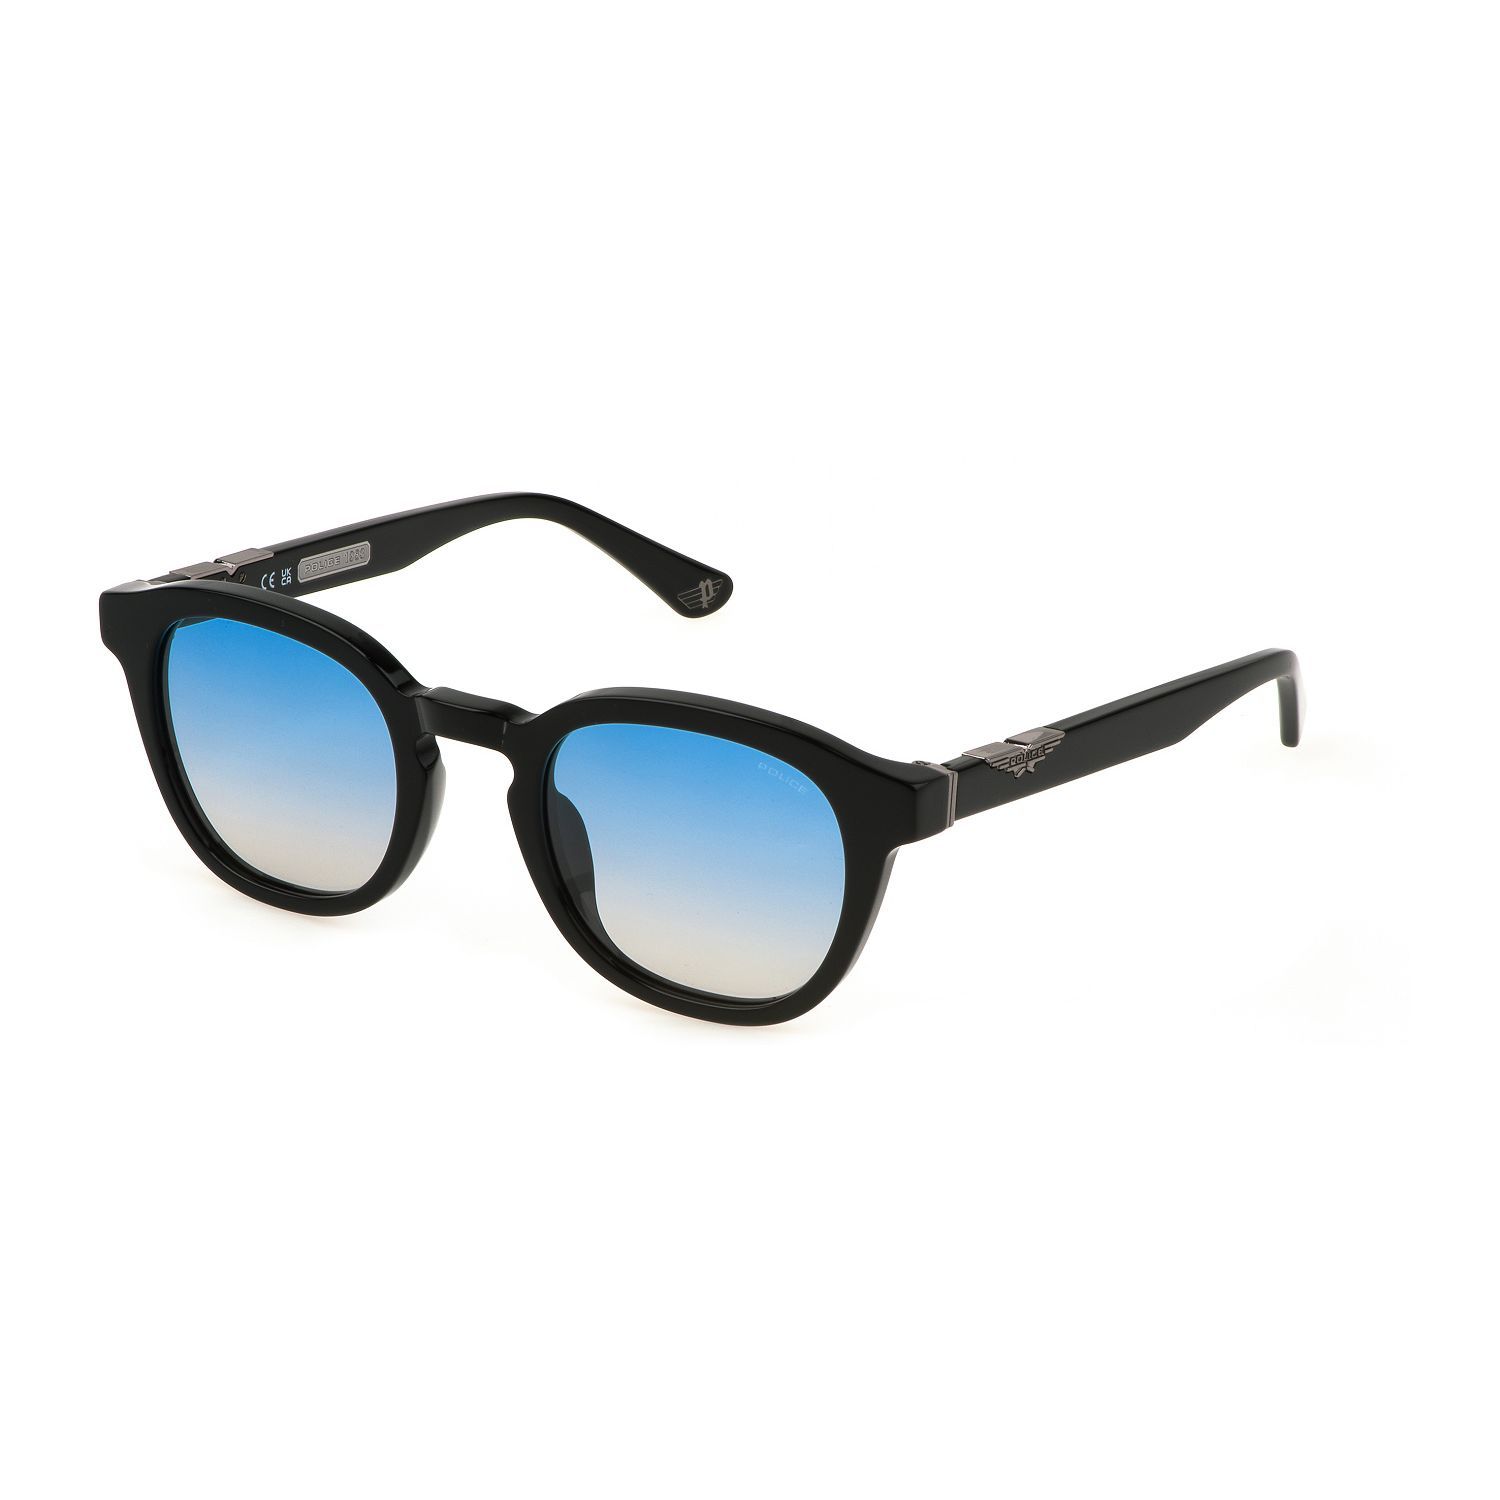 SPLL82M Panthos Sunglasses 0700 - size 50